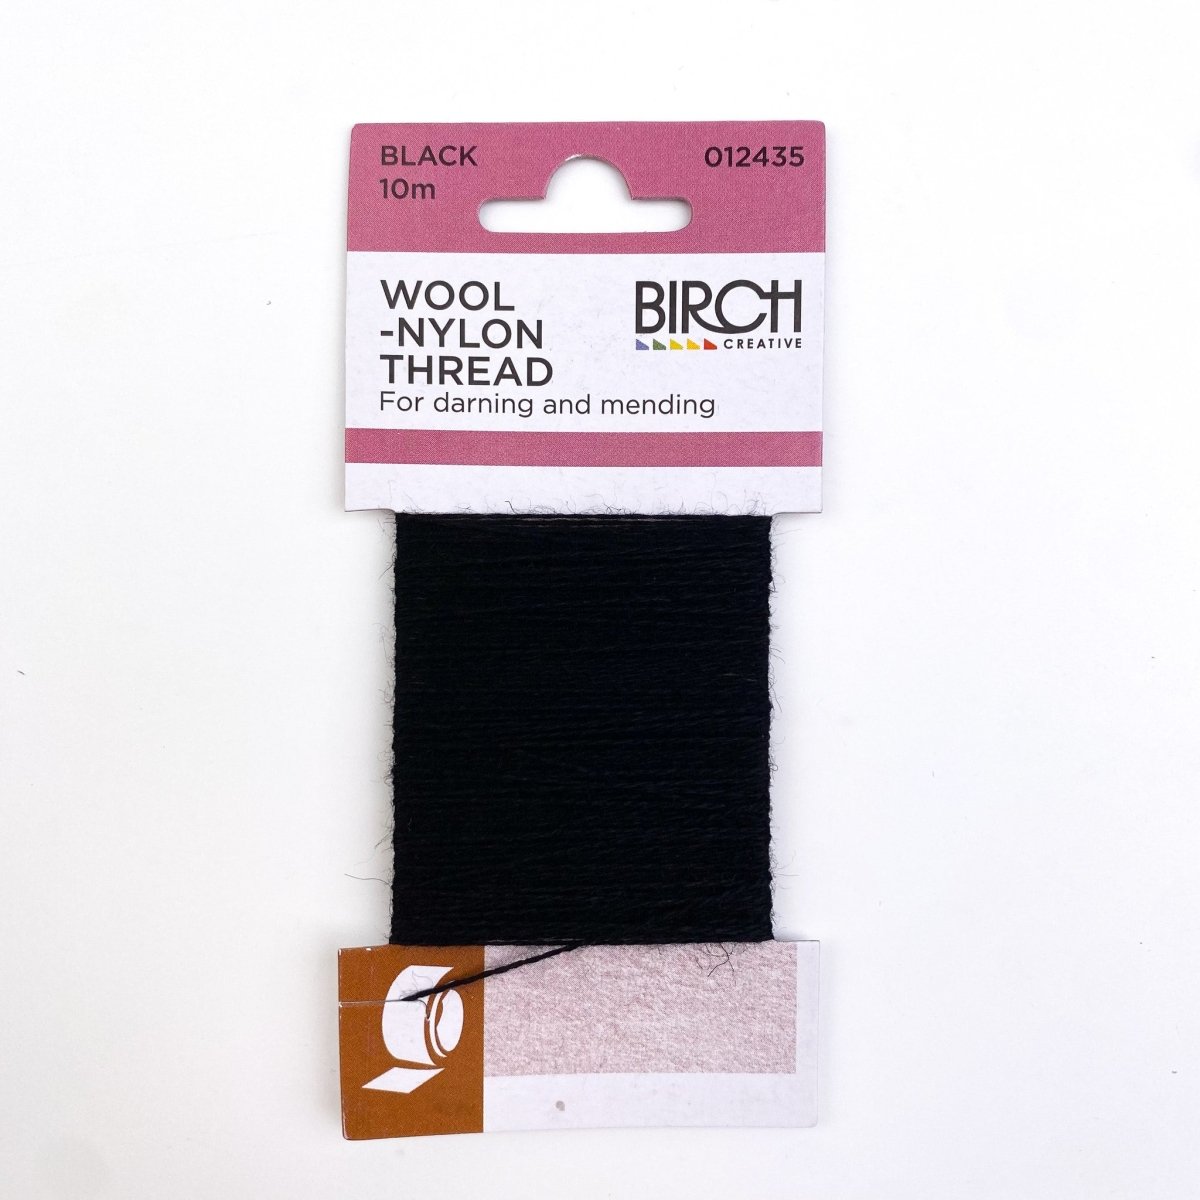 Birch  - Wool-Nylon Thread For Darning and Mending